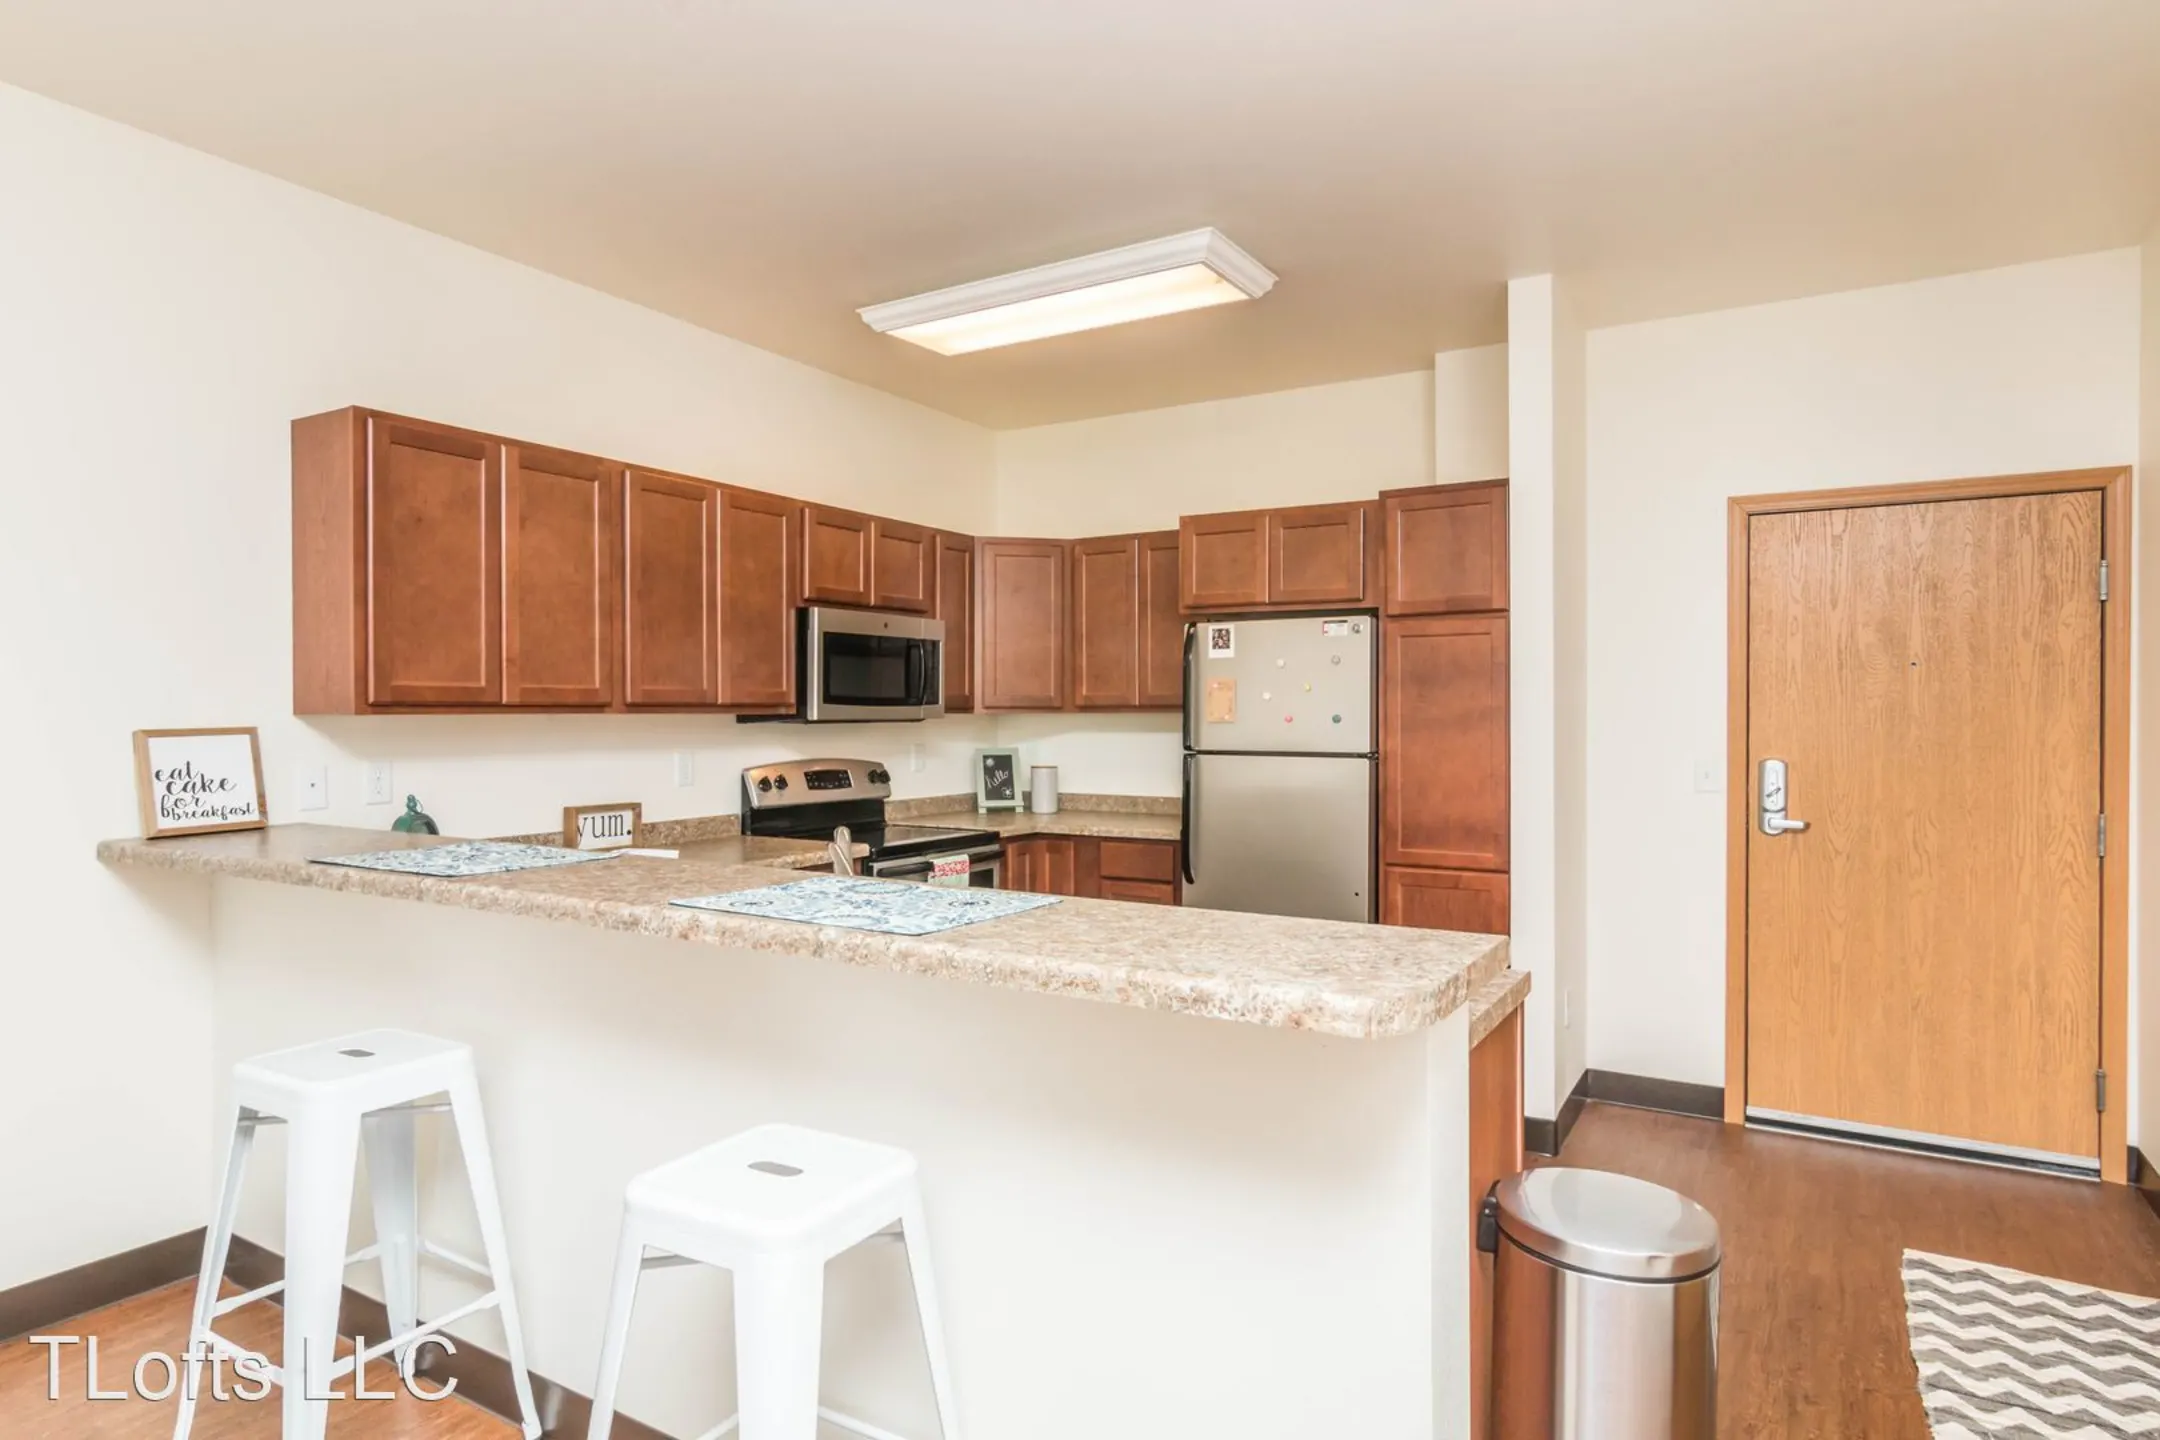 Kitchen - TLofts Apartments - Fargo, ND